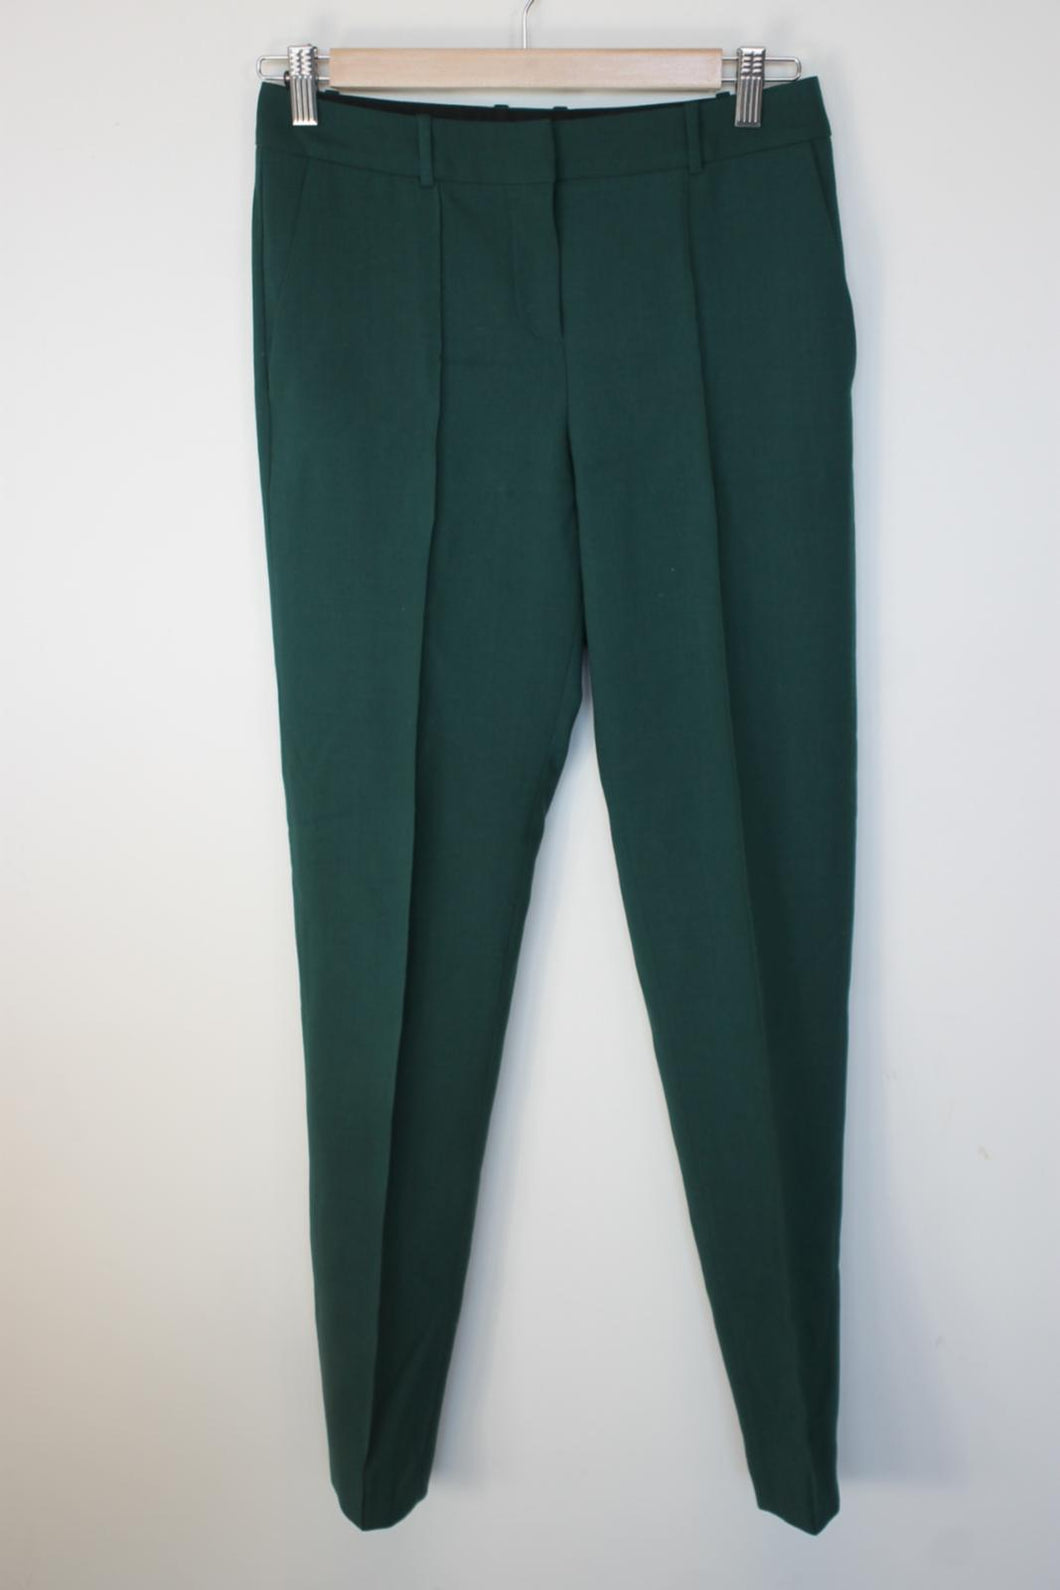 HUGO BOSS Ladies Green Wool Tapered Dress Trousers FR34 UK4